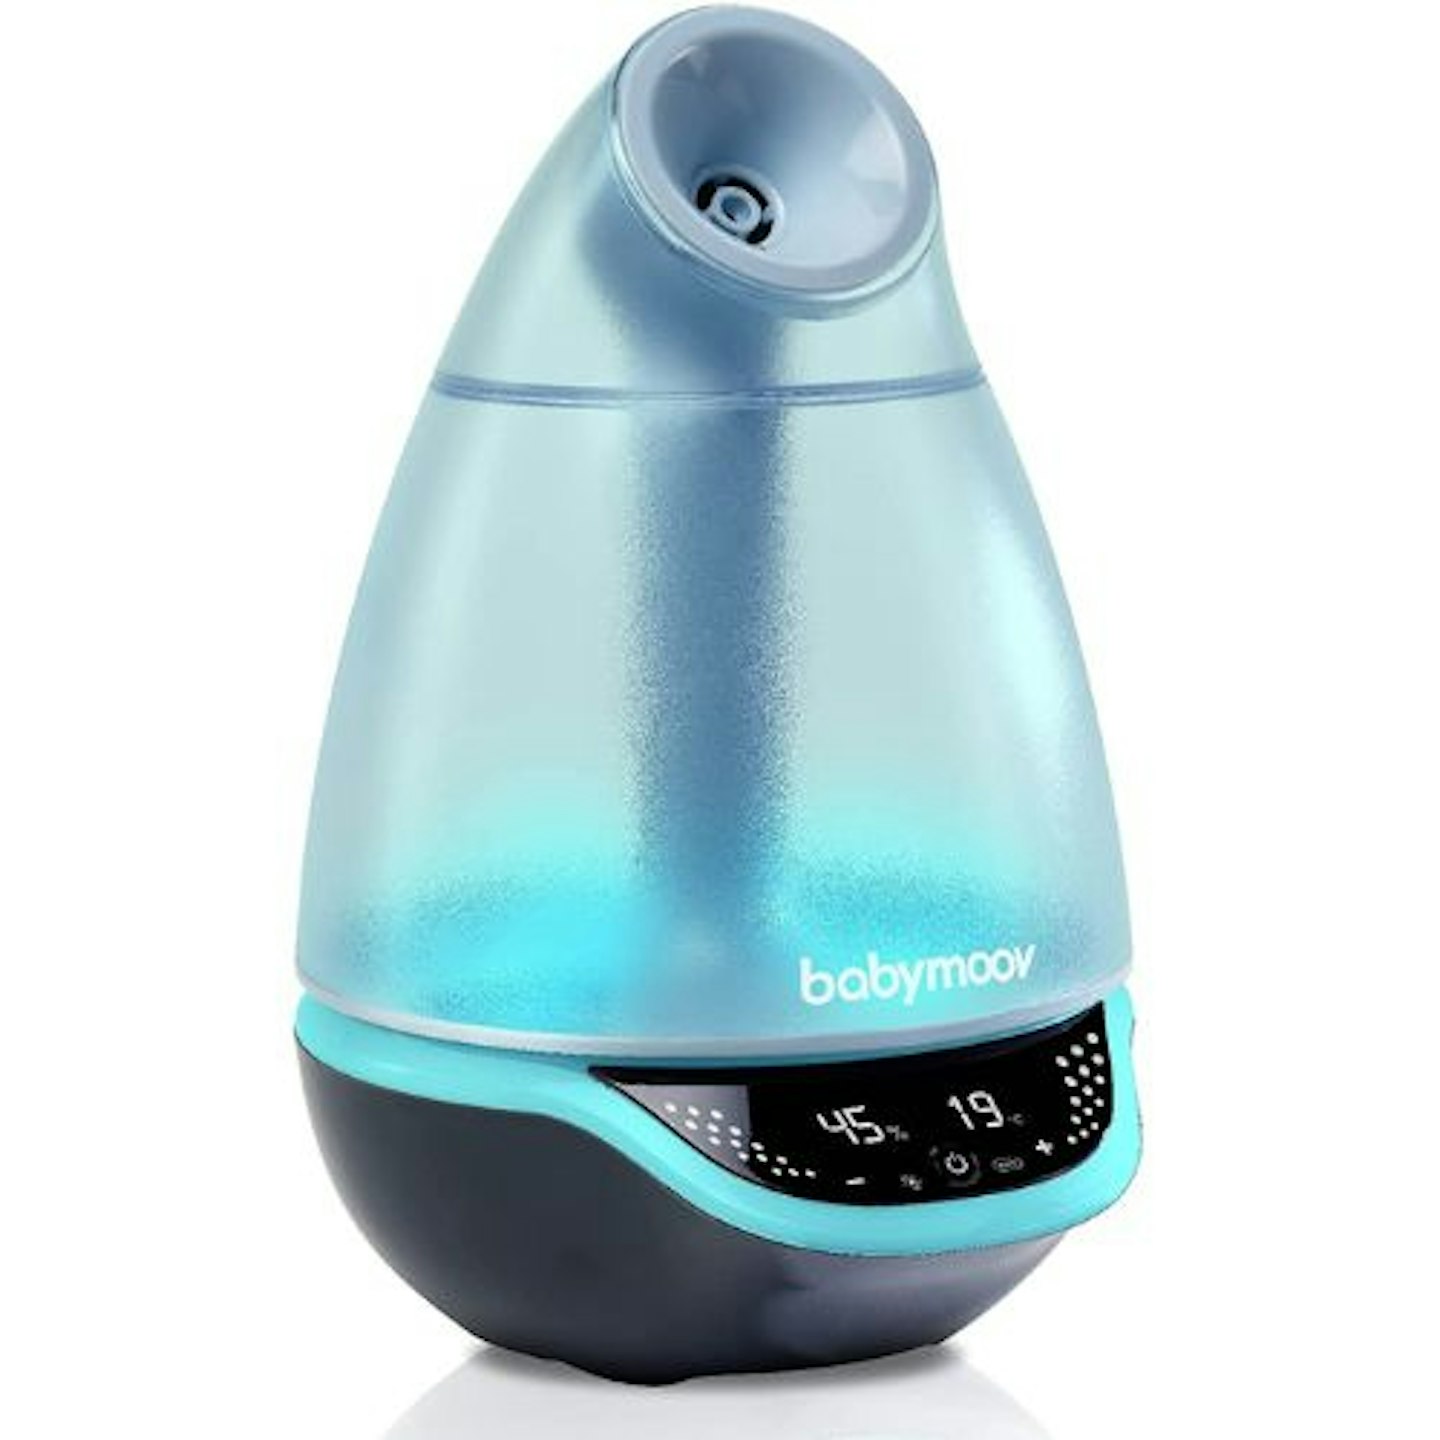 Babymoov Hygro Plus Humidifier